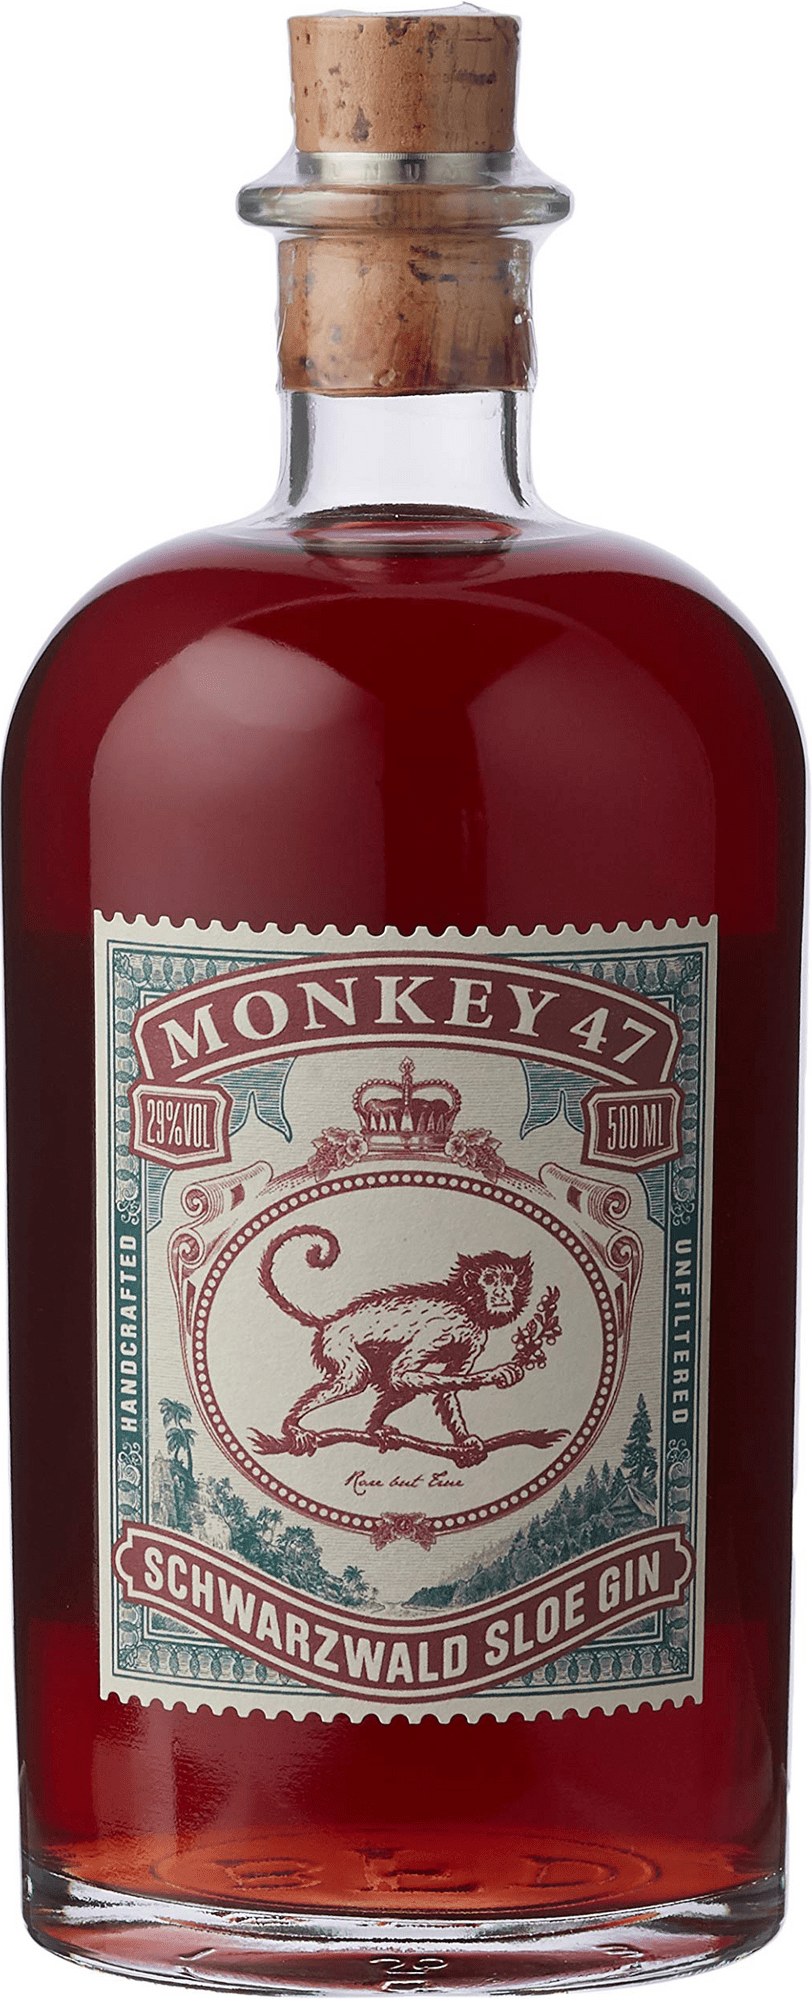 Monkey 47 Schwarzwald Sloe Gin 0,5l 29%